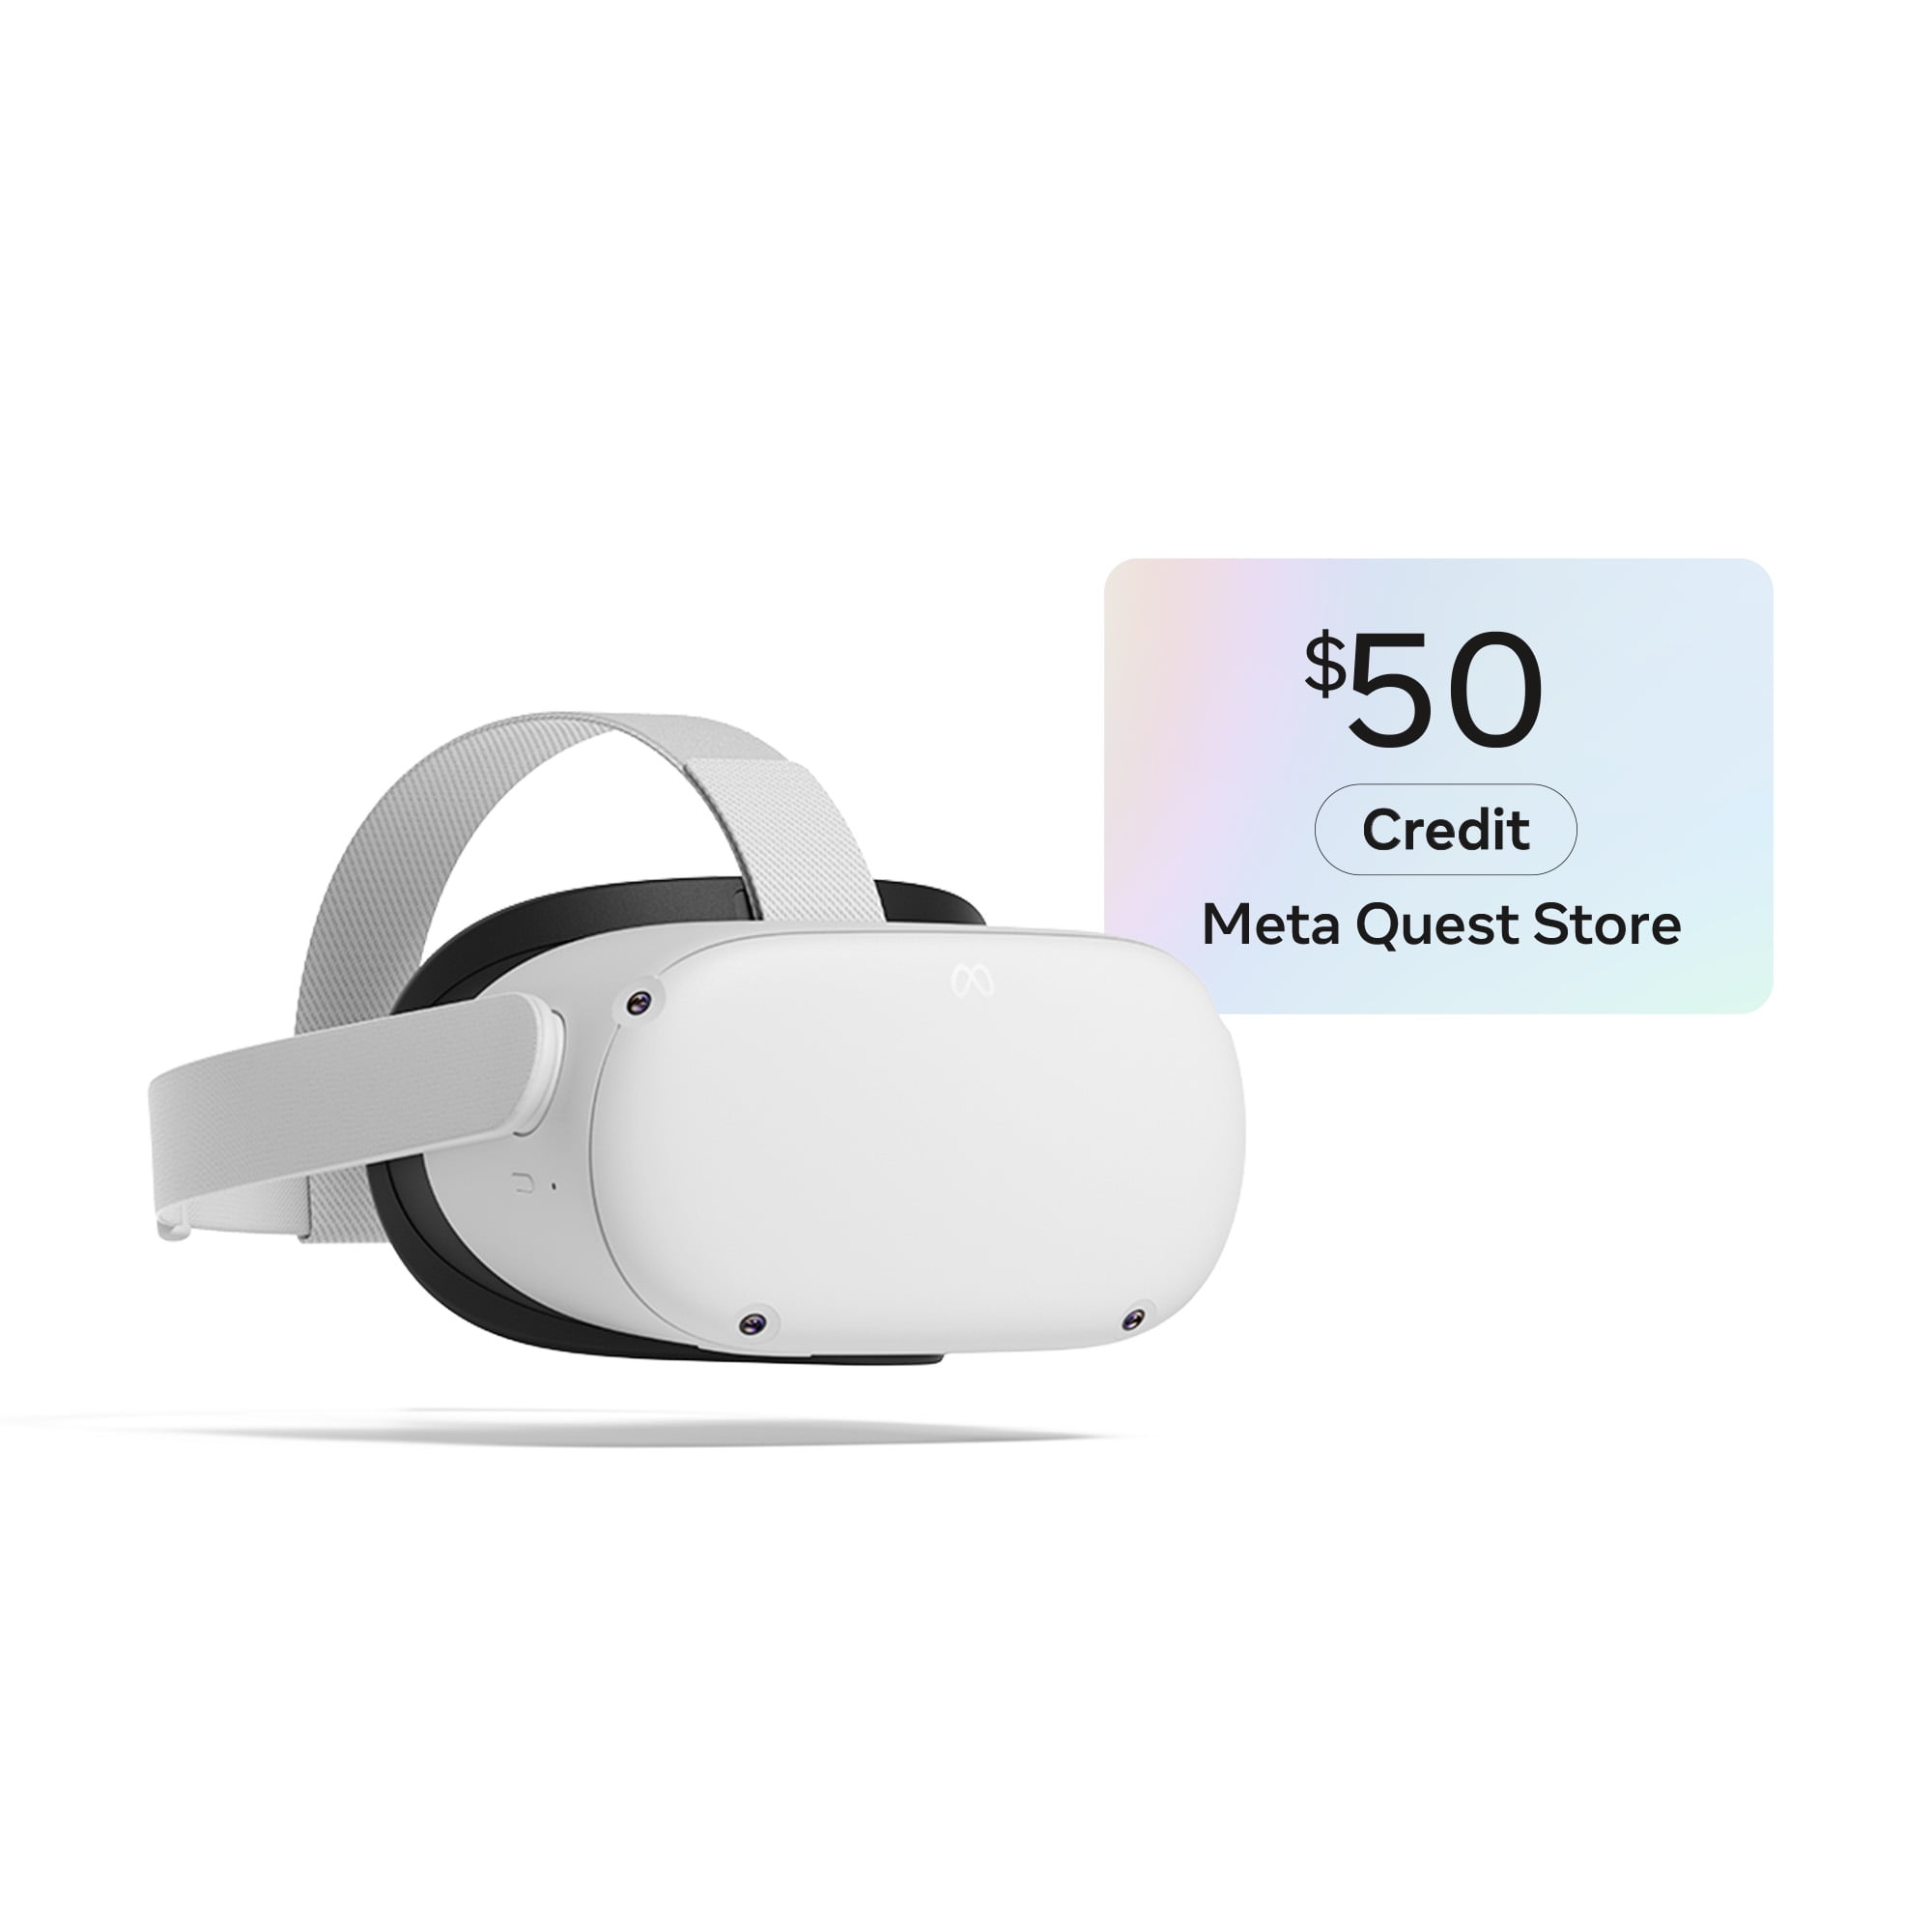 Meta Quest 2 128GB + $50 credit in the Meta Quest Store